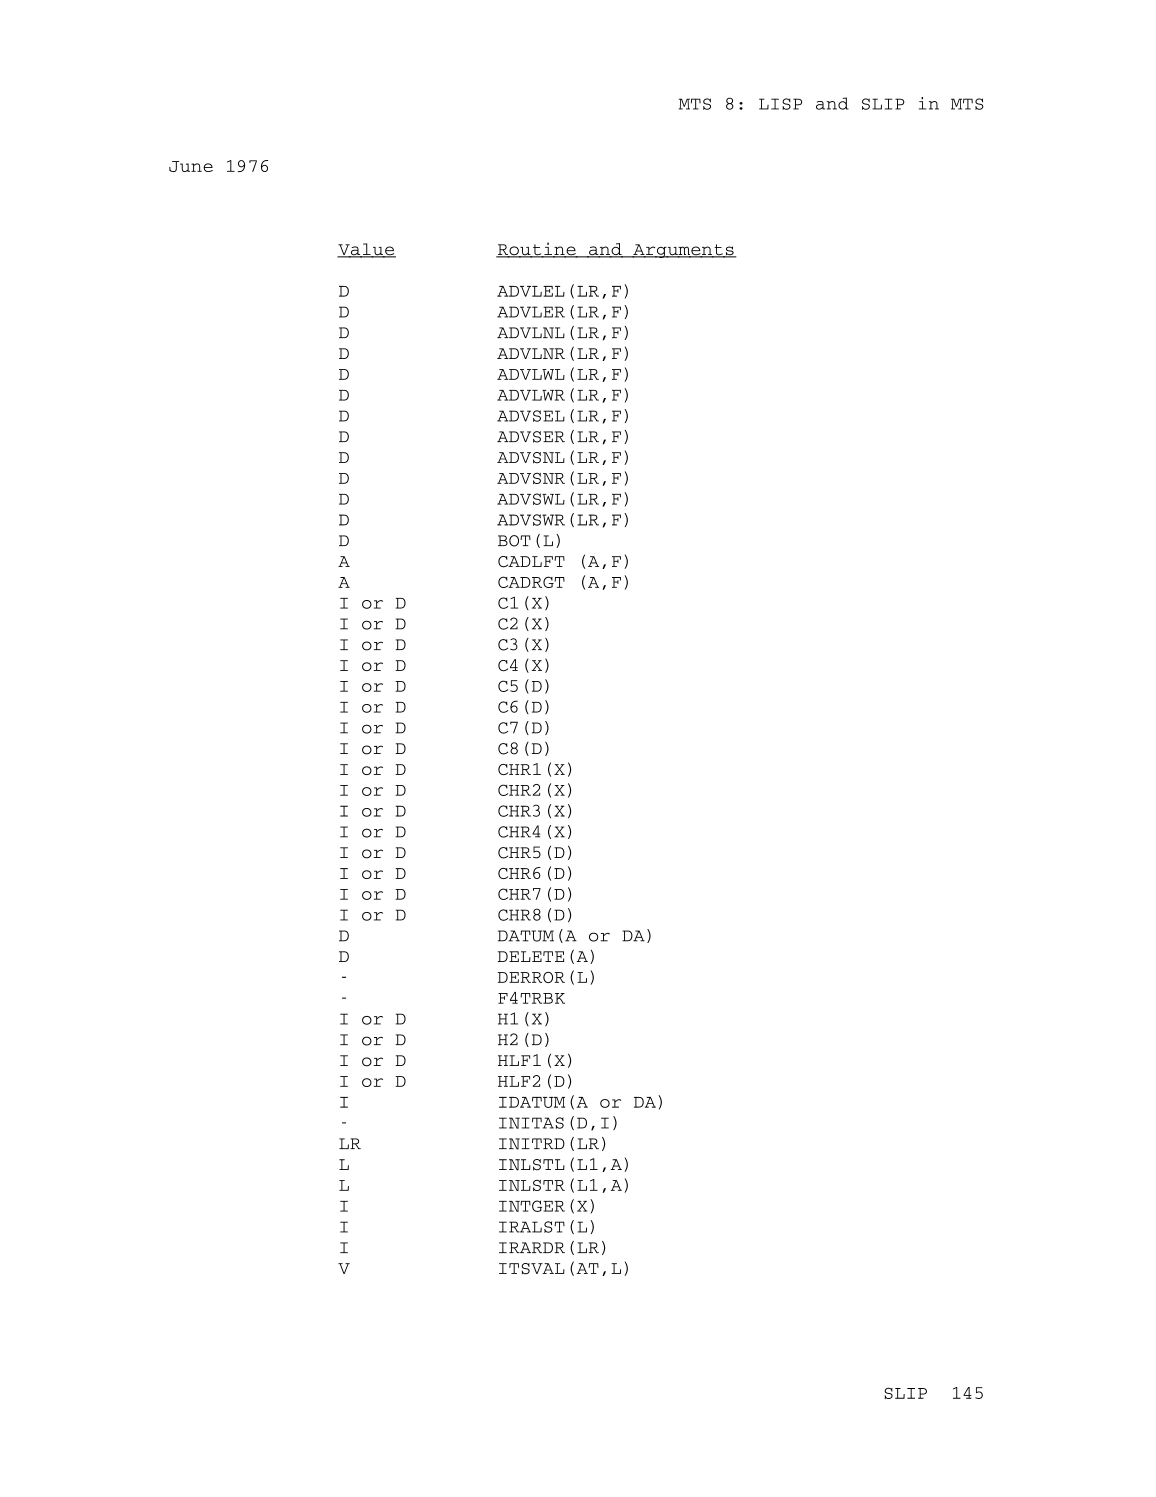 MTS Volume 8 - LISP and SLIP page 144